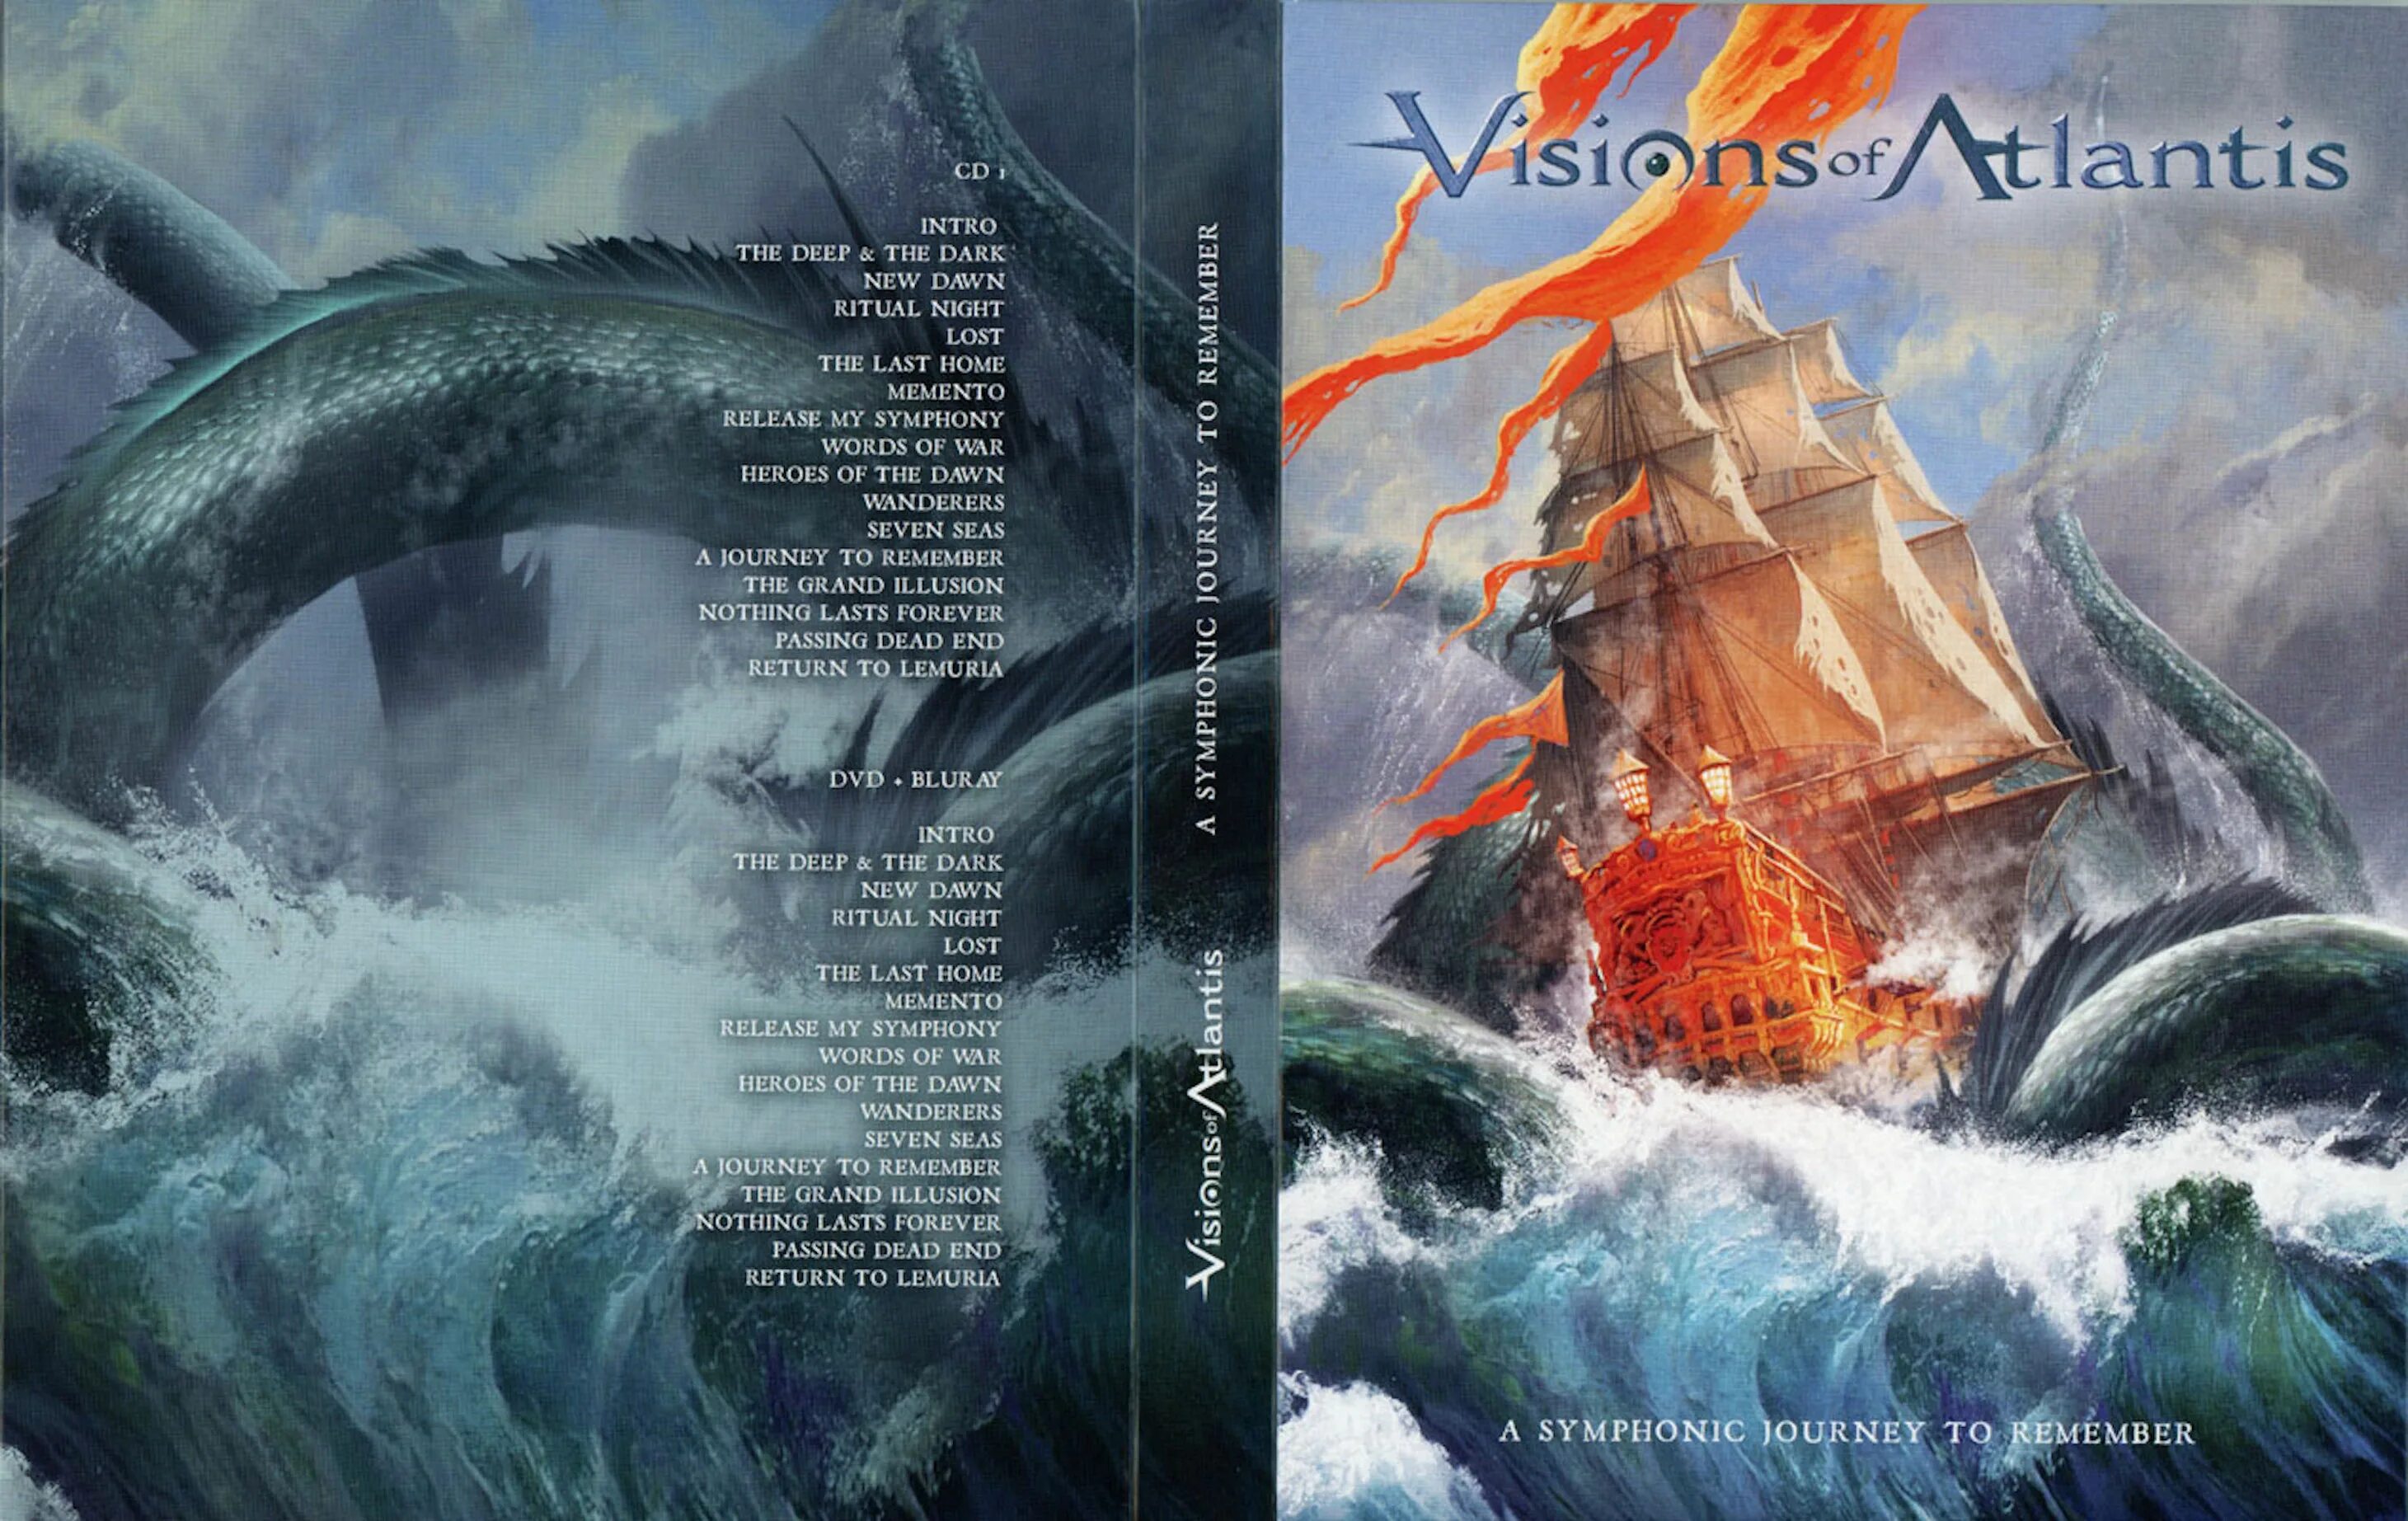 Обложки CD Visions of Atlantis. Visions of Atlantis обложка. Visions of Atlantis 2002. Atlantis Band. Visions of atlantis armada